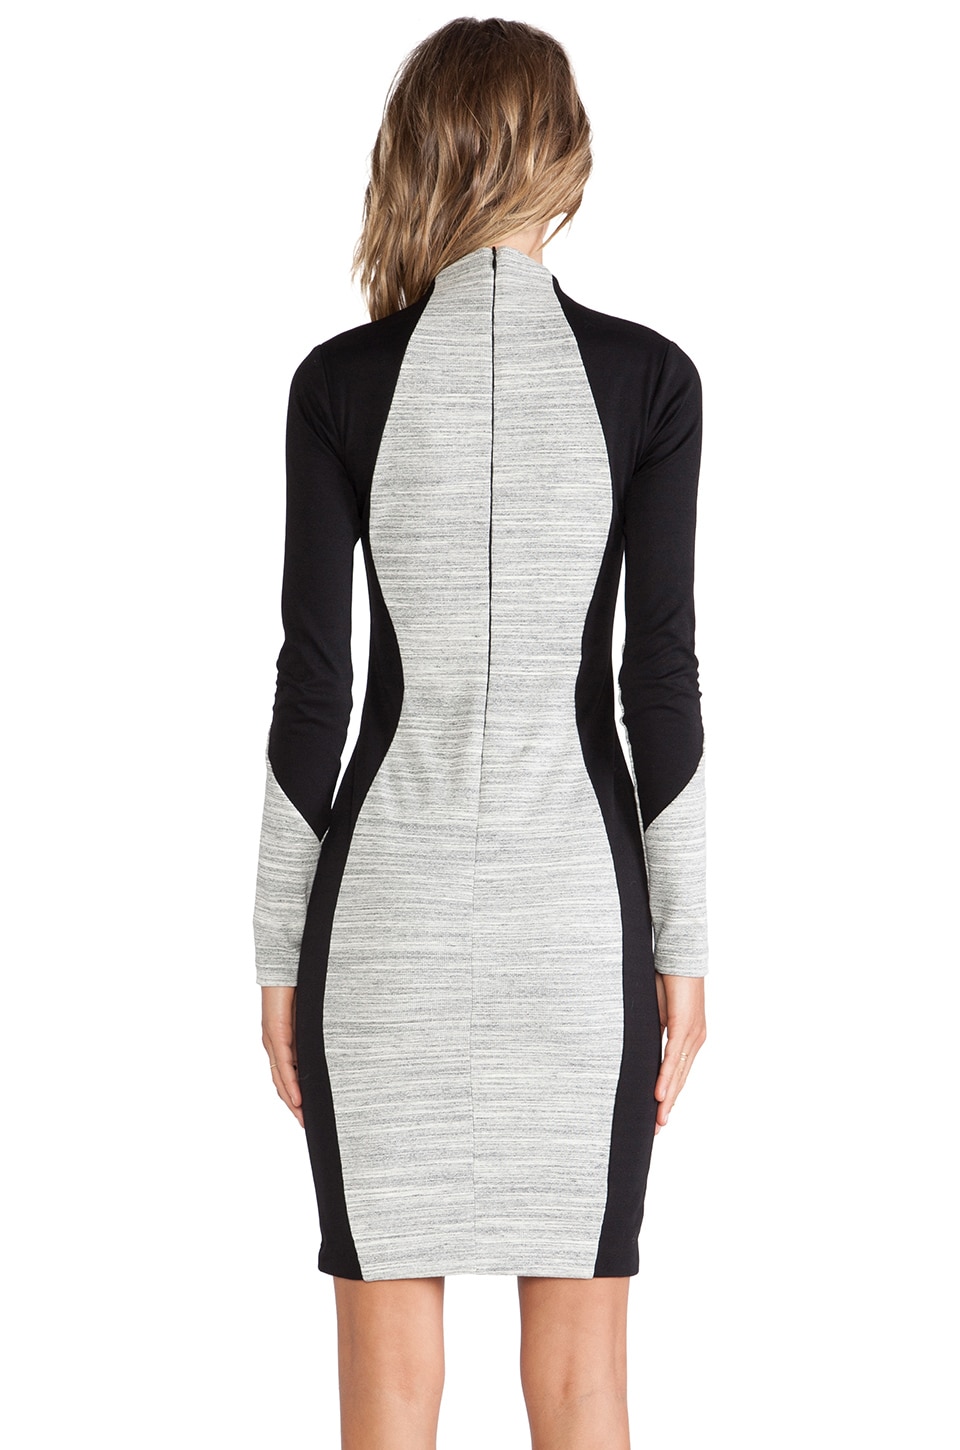 sen Muriel Dress in Heather Grey Stripe & Black | REVOLVE